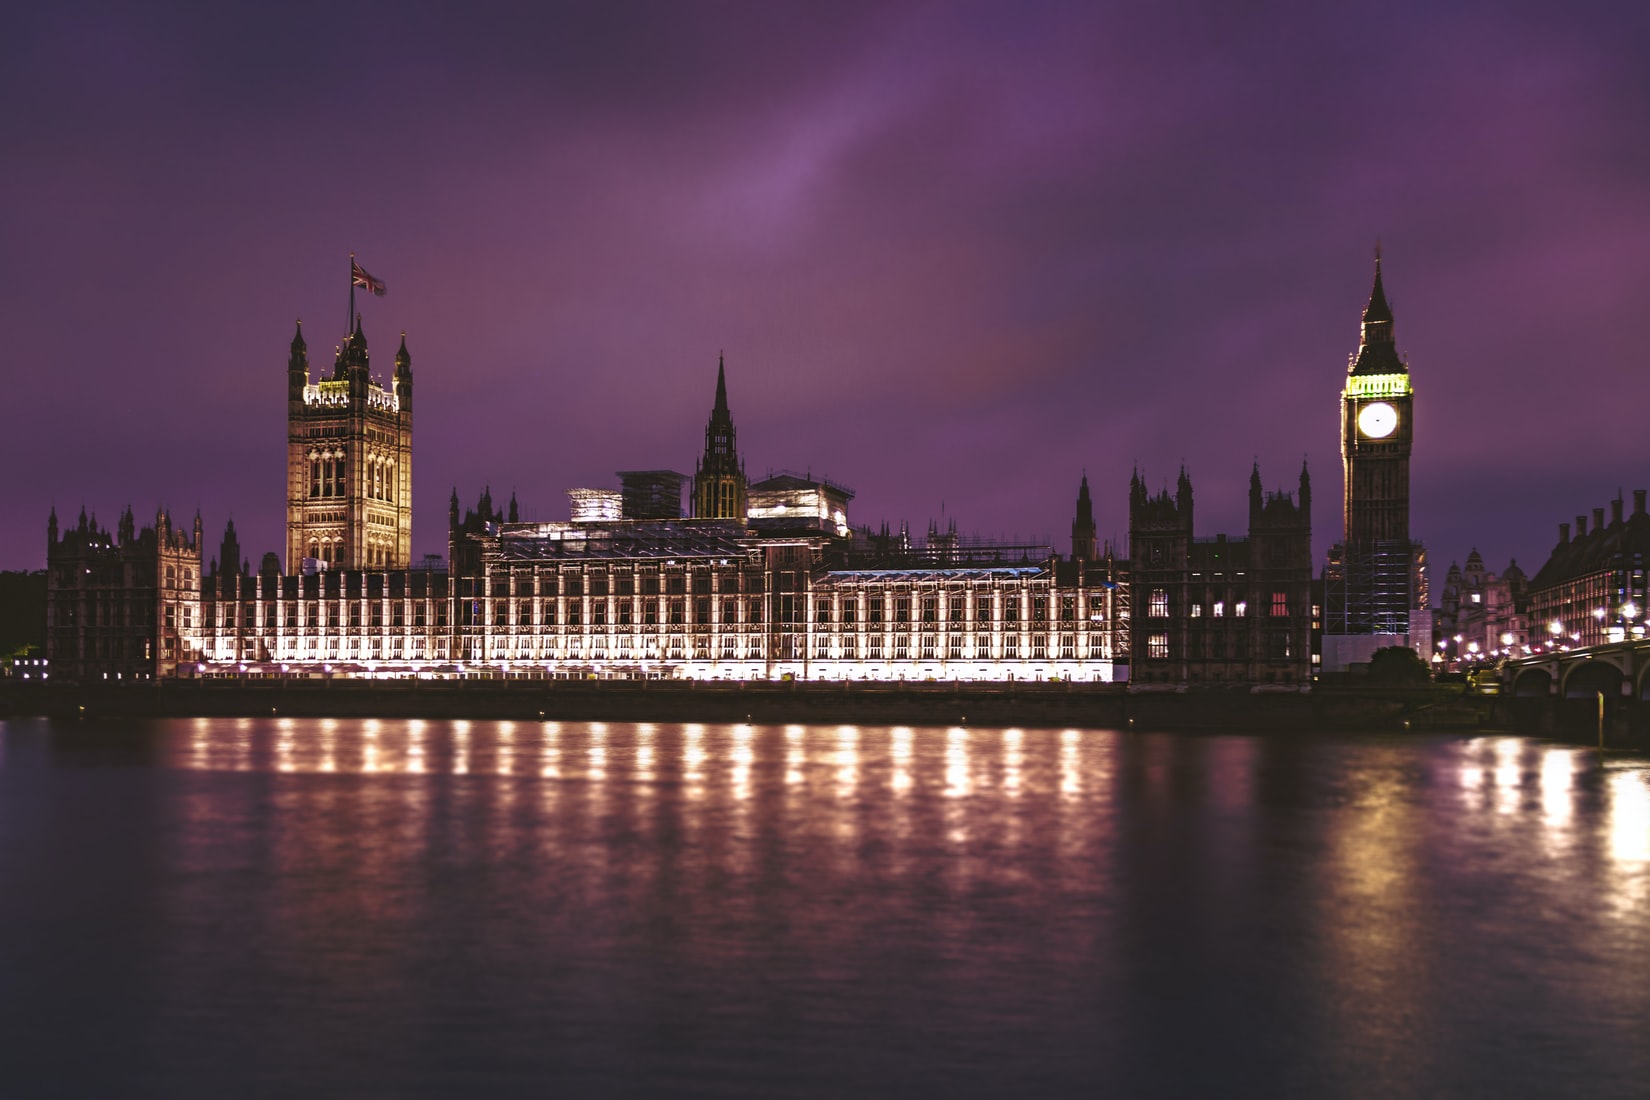 Parliament: The Building